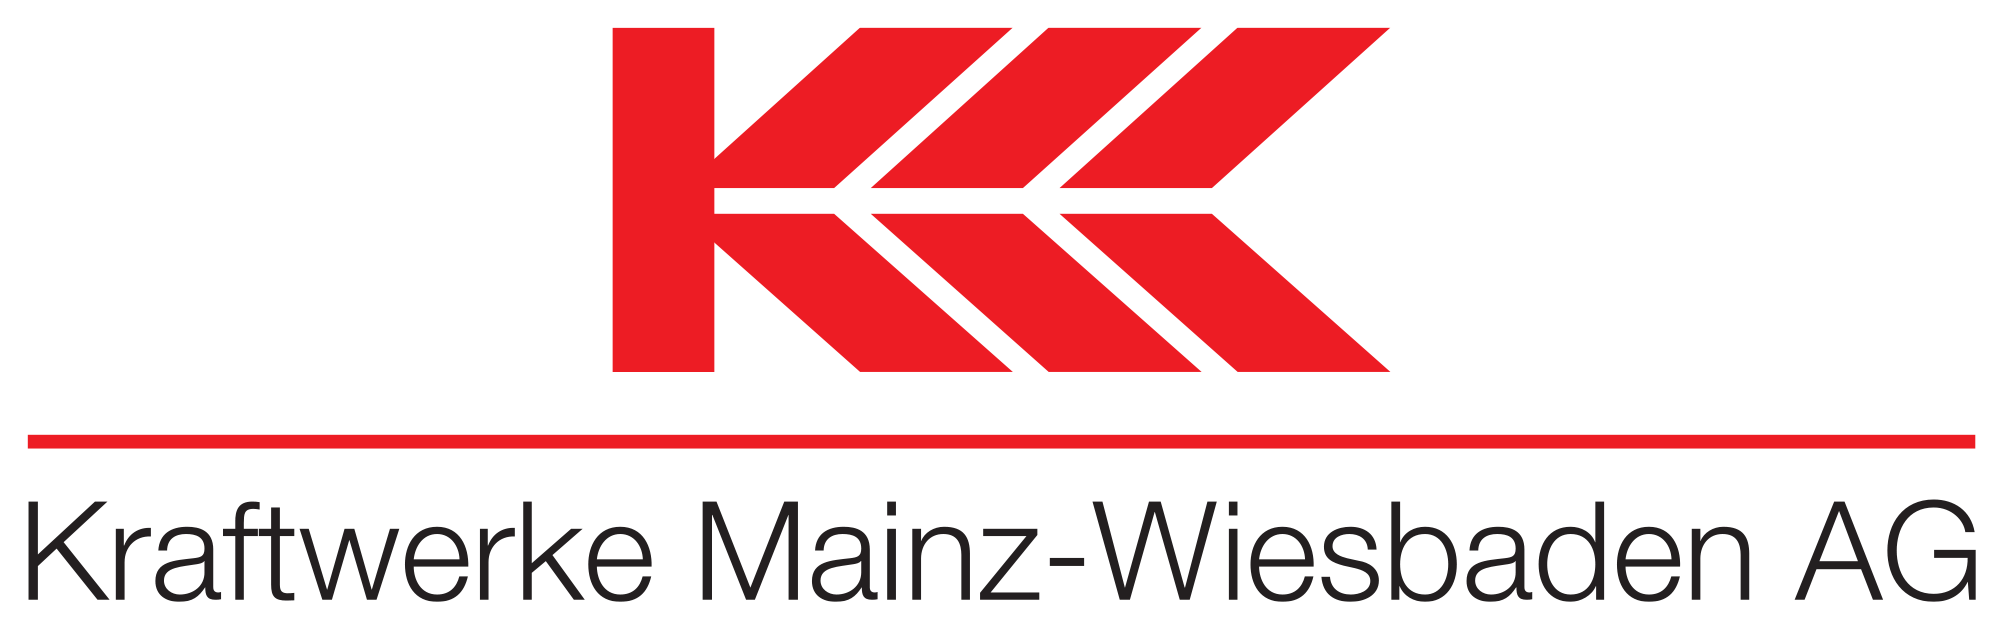 Kraftwerke Mainz Wiesbaden